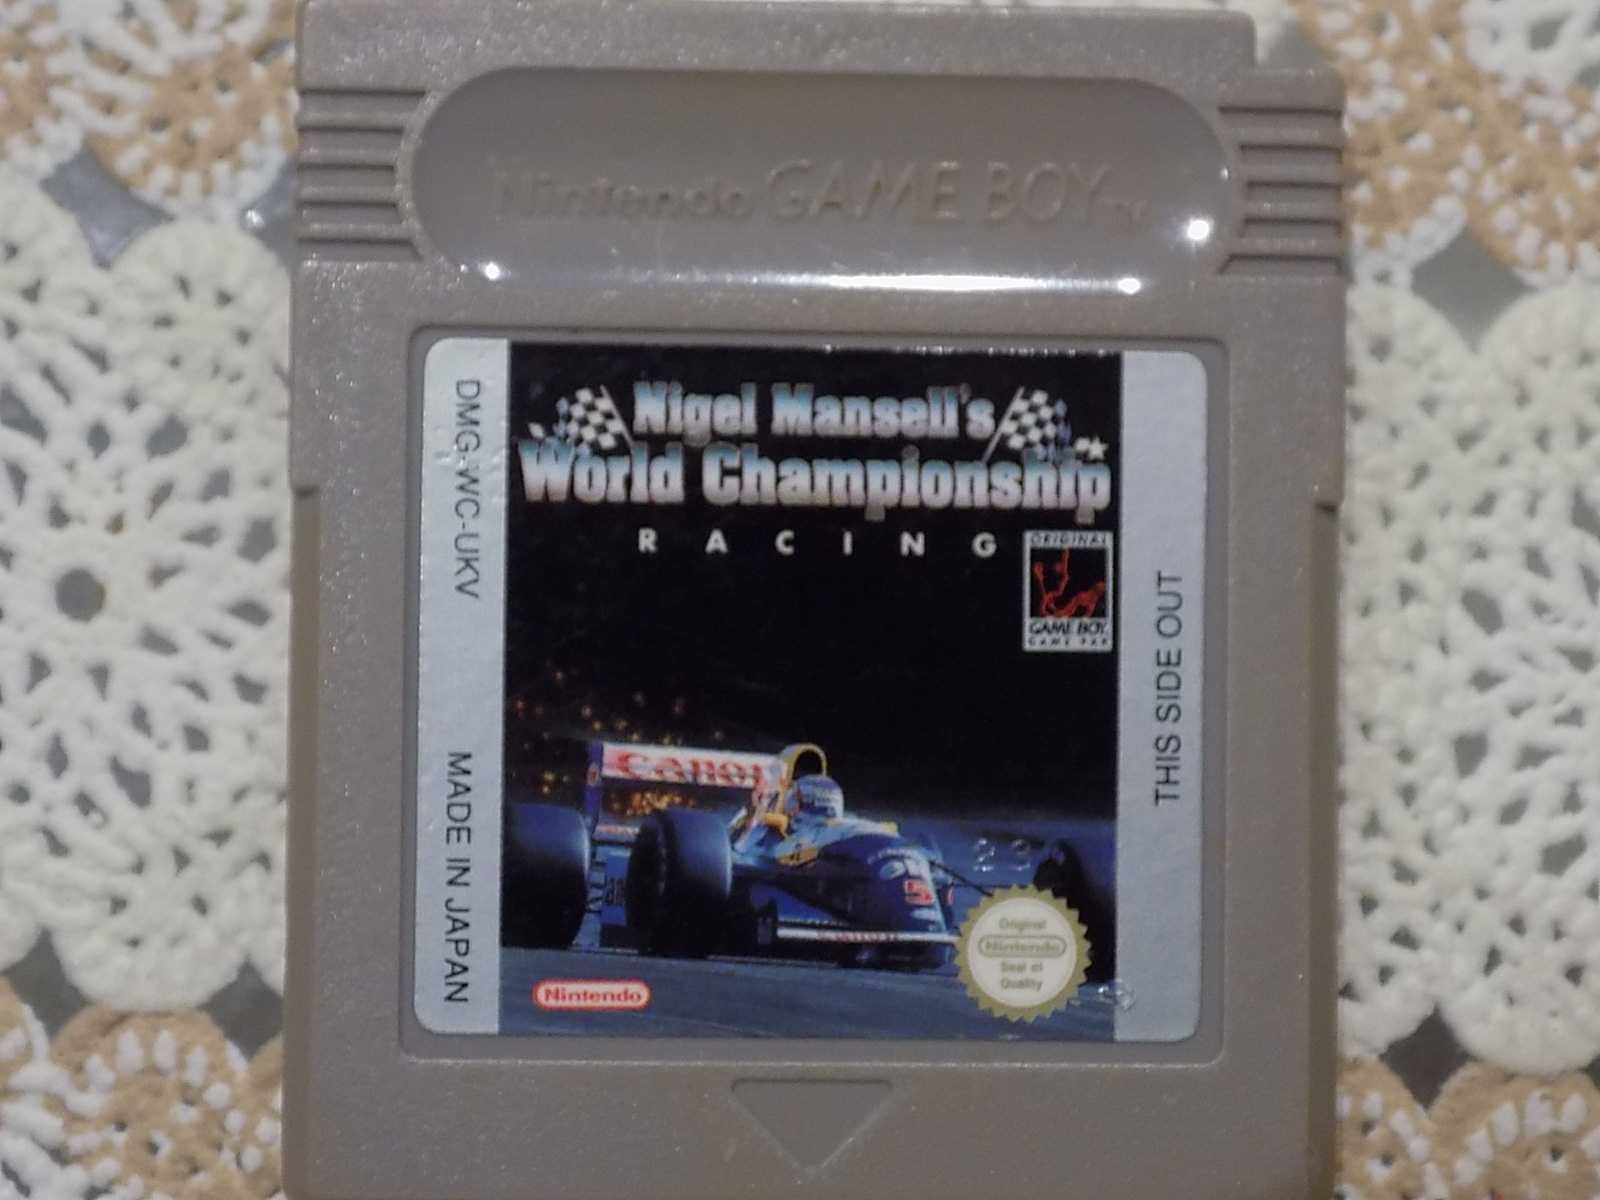 Nigel Mansell's World Championship Racing na Nintendo Game Boy/GBC/GBA